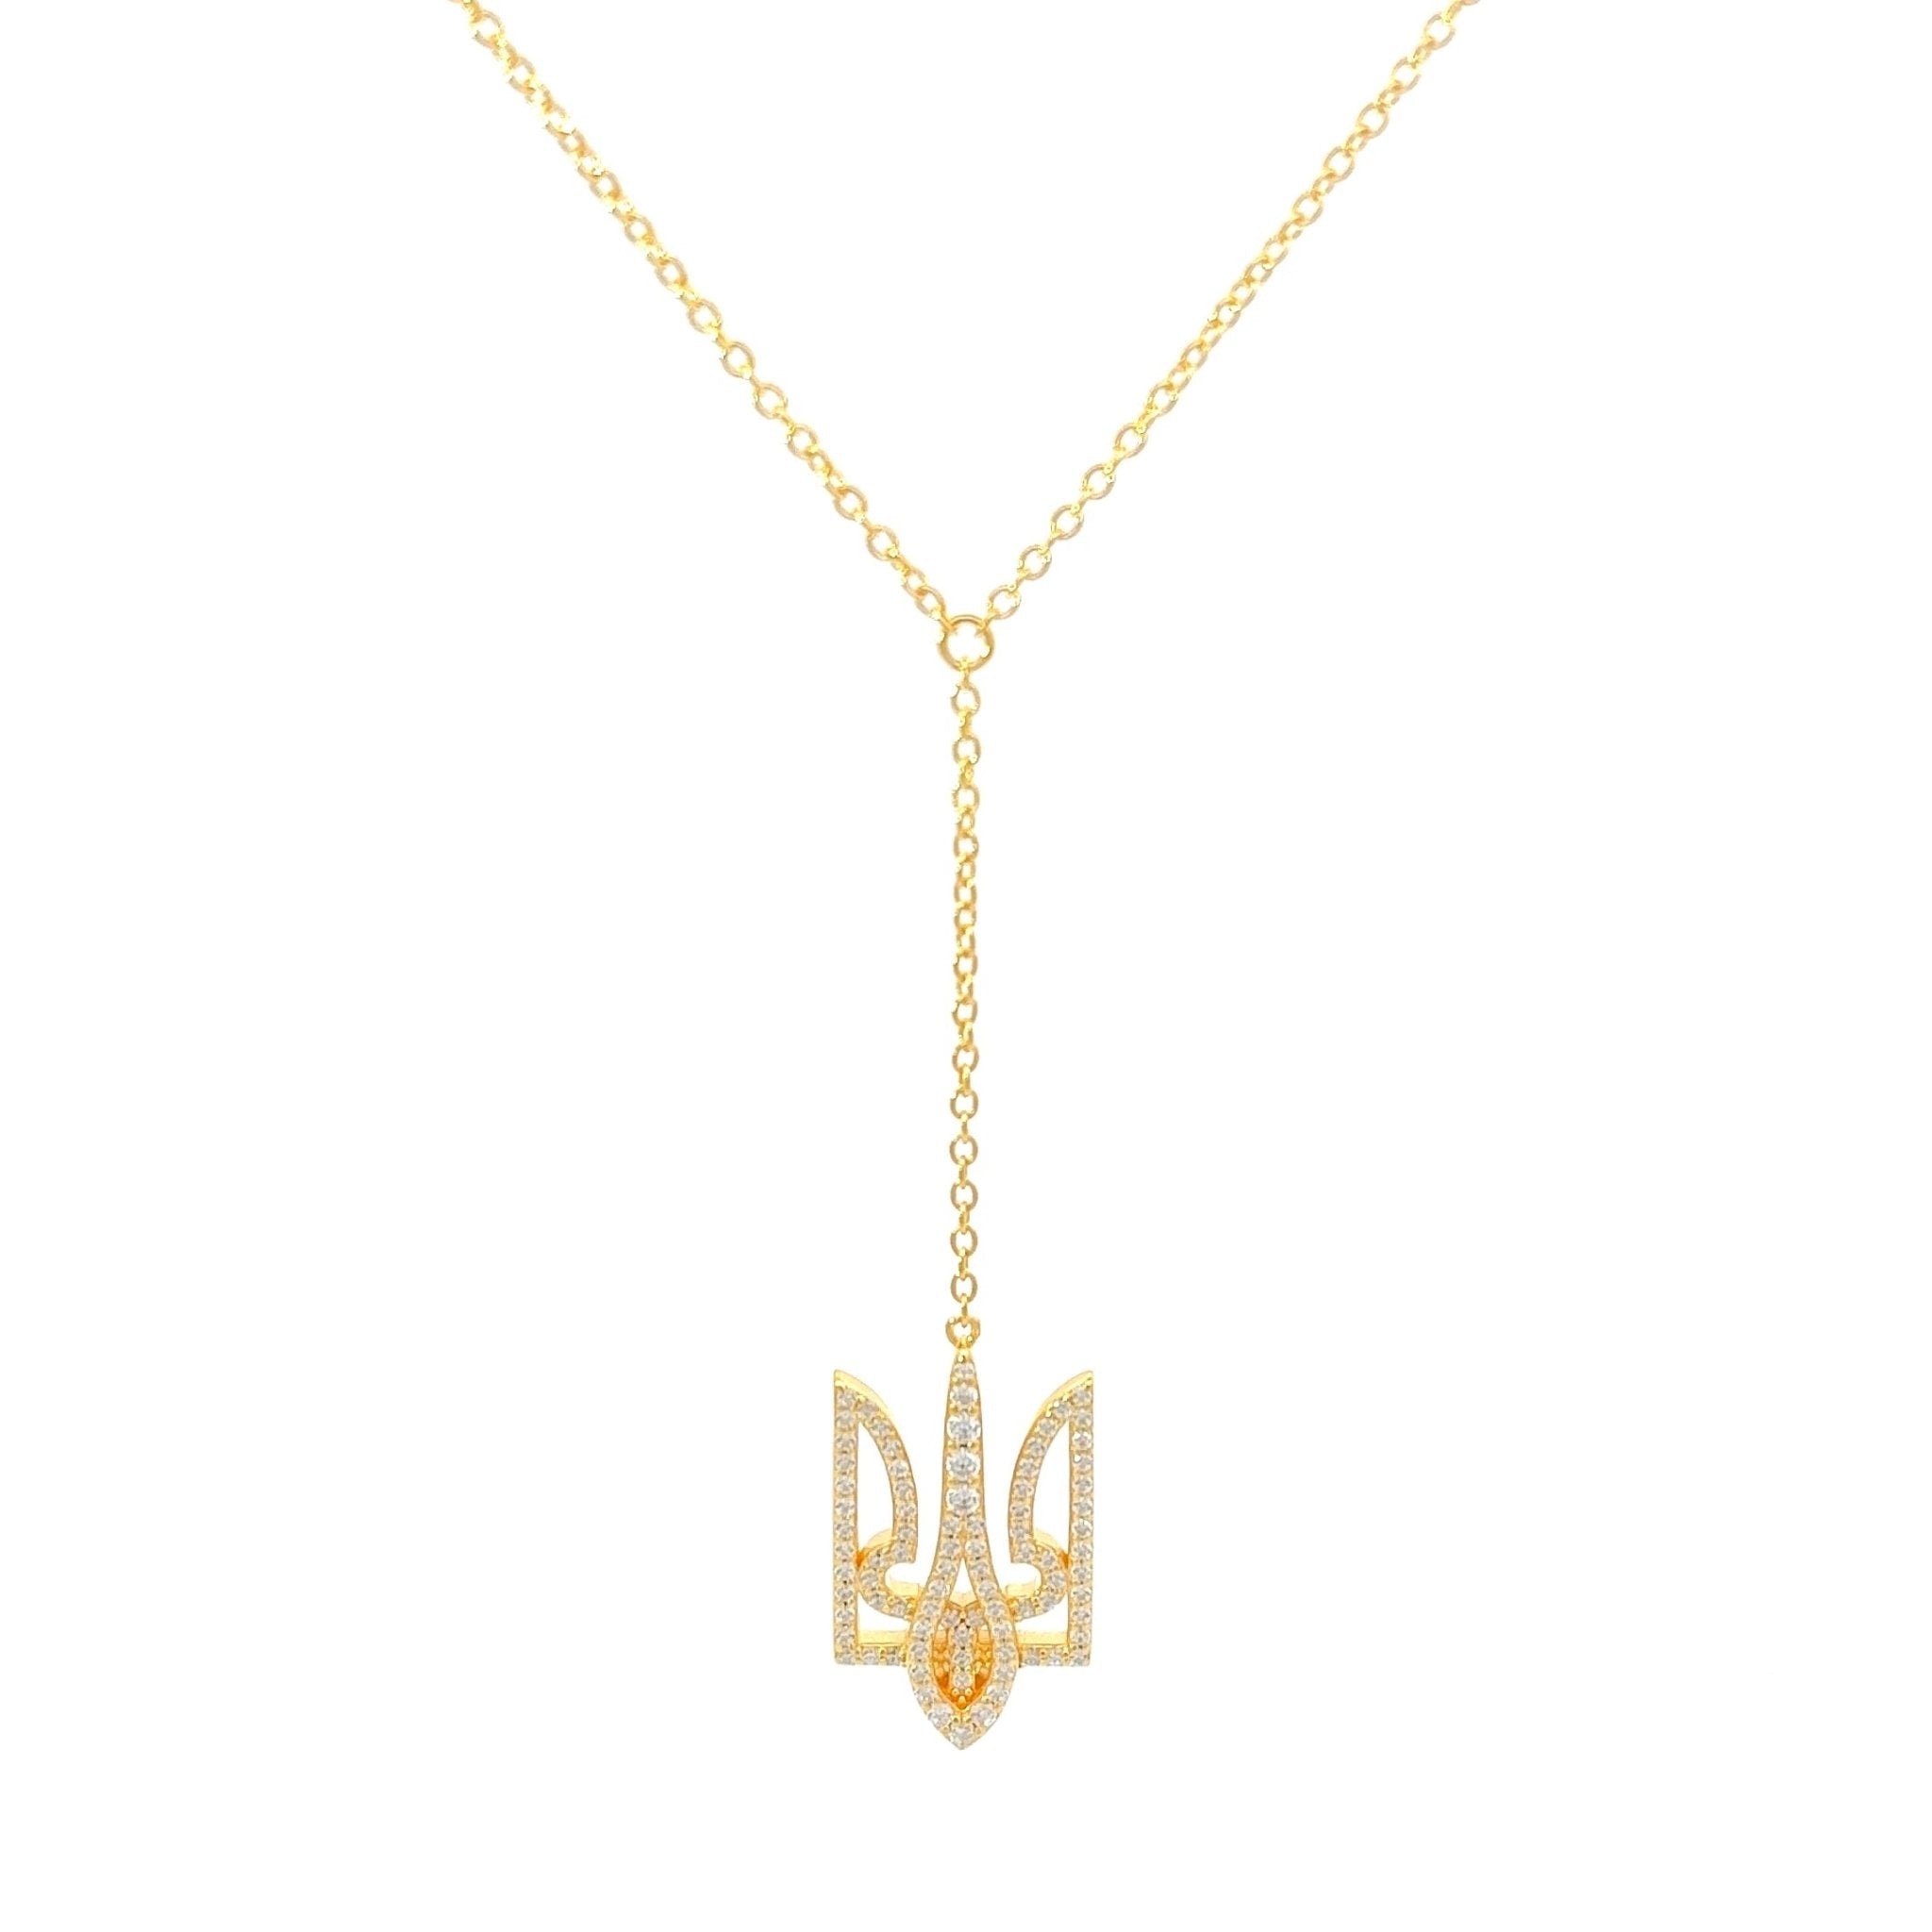 +380 Ukrainian Necklace with Coat of Arms Zirconia by Natkina